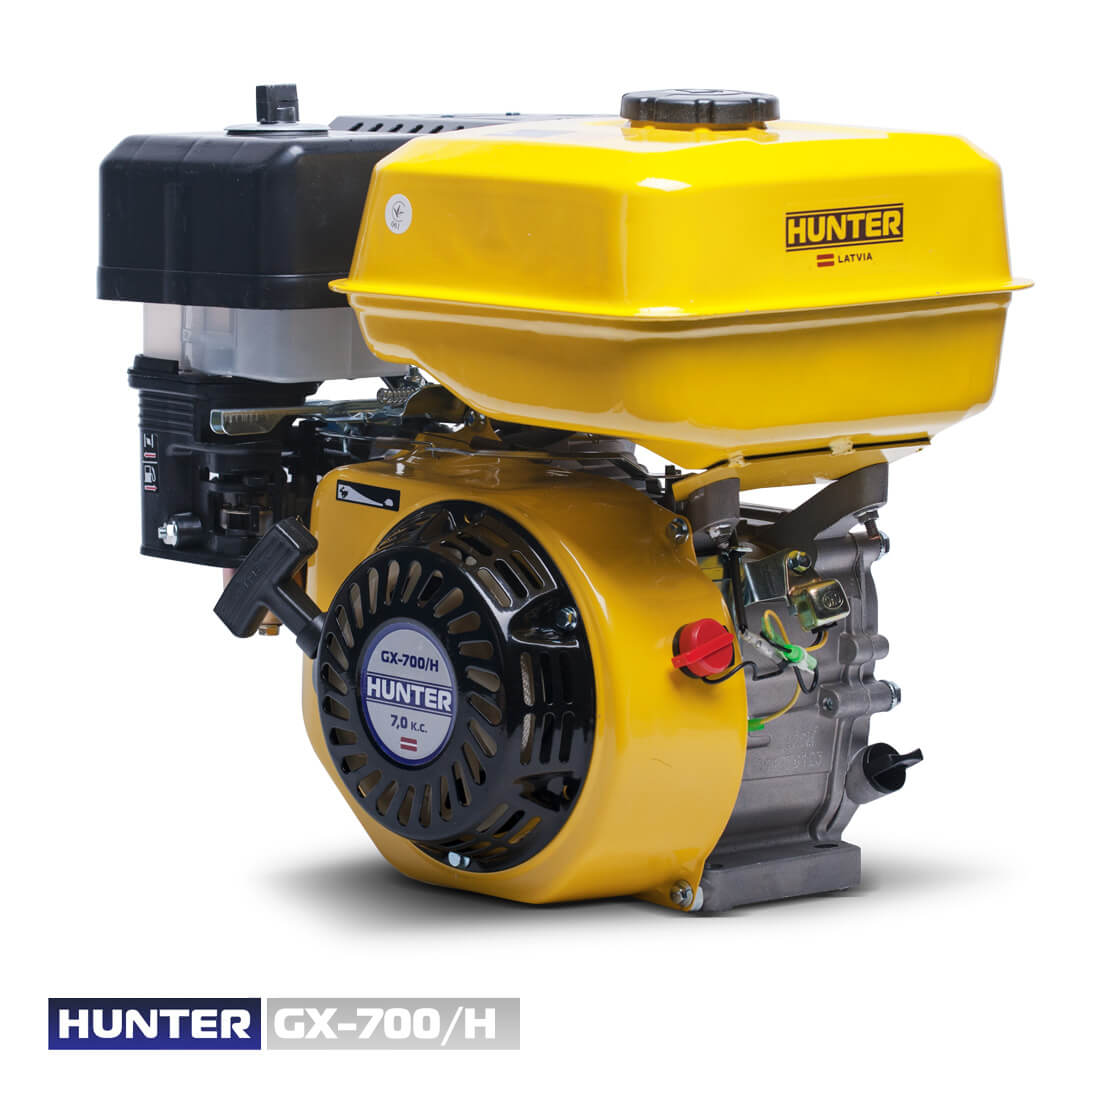 Фото Двигатель бензиновый HUNTER GX-700/H (шлиц) цена 5300грн №1 — Hunter